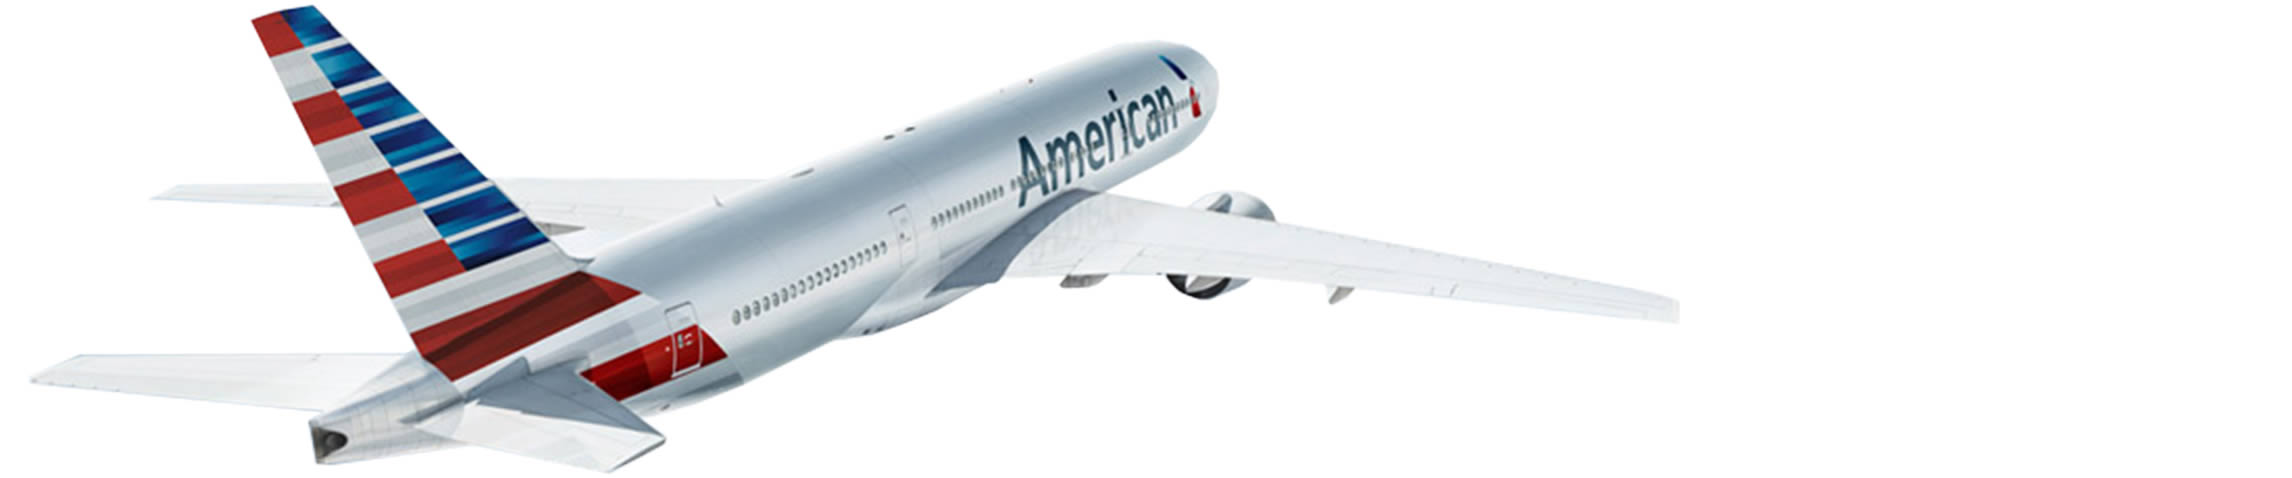 American Airlines passenger p